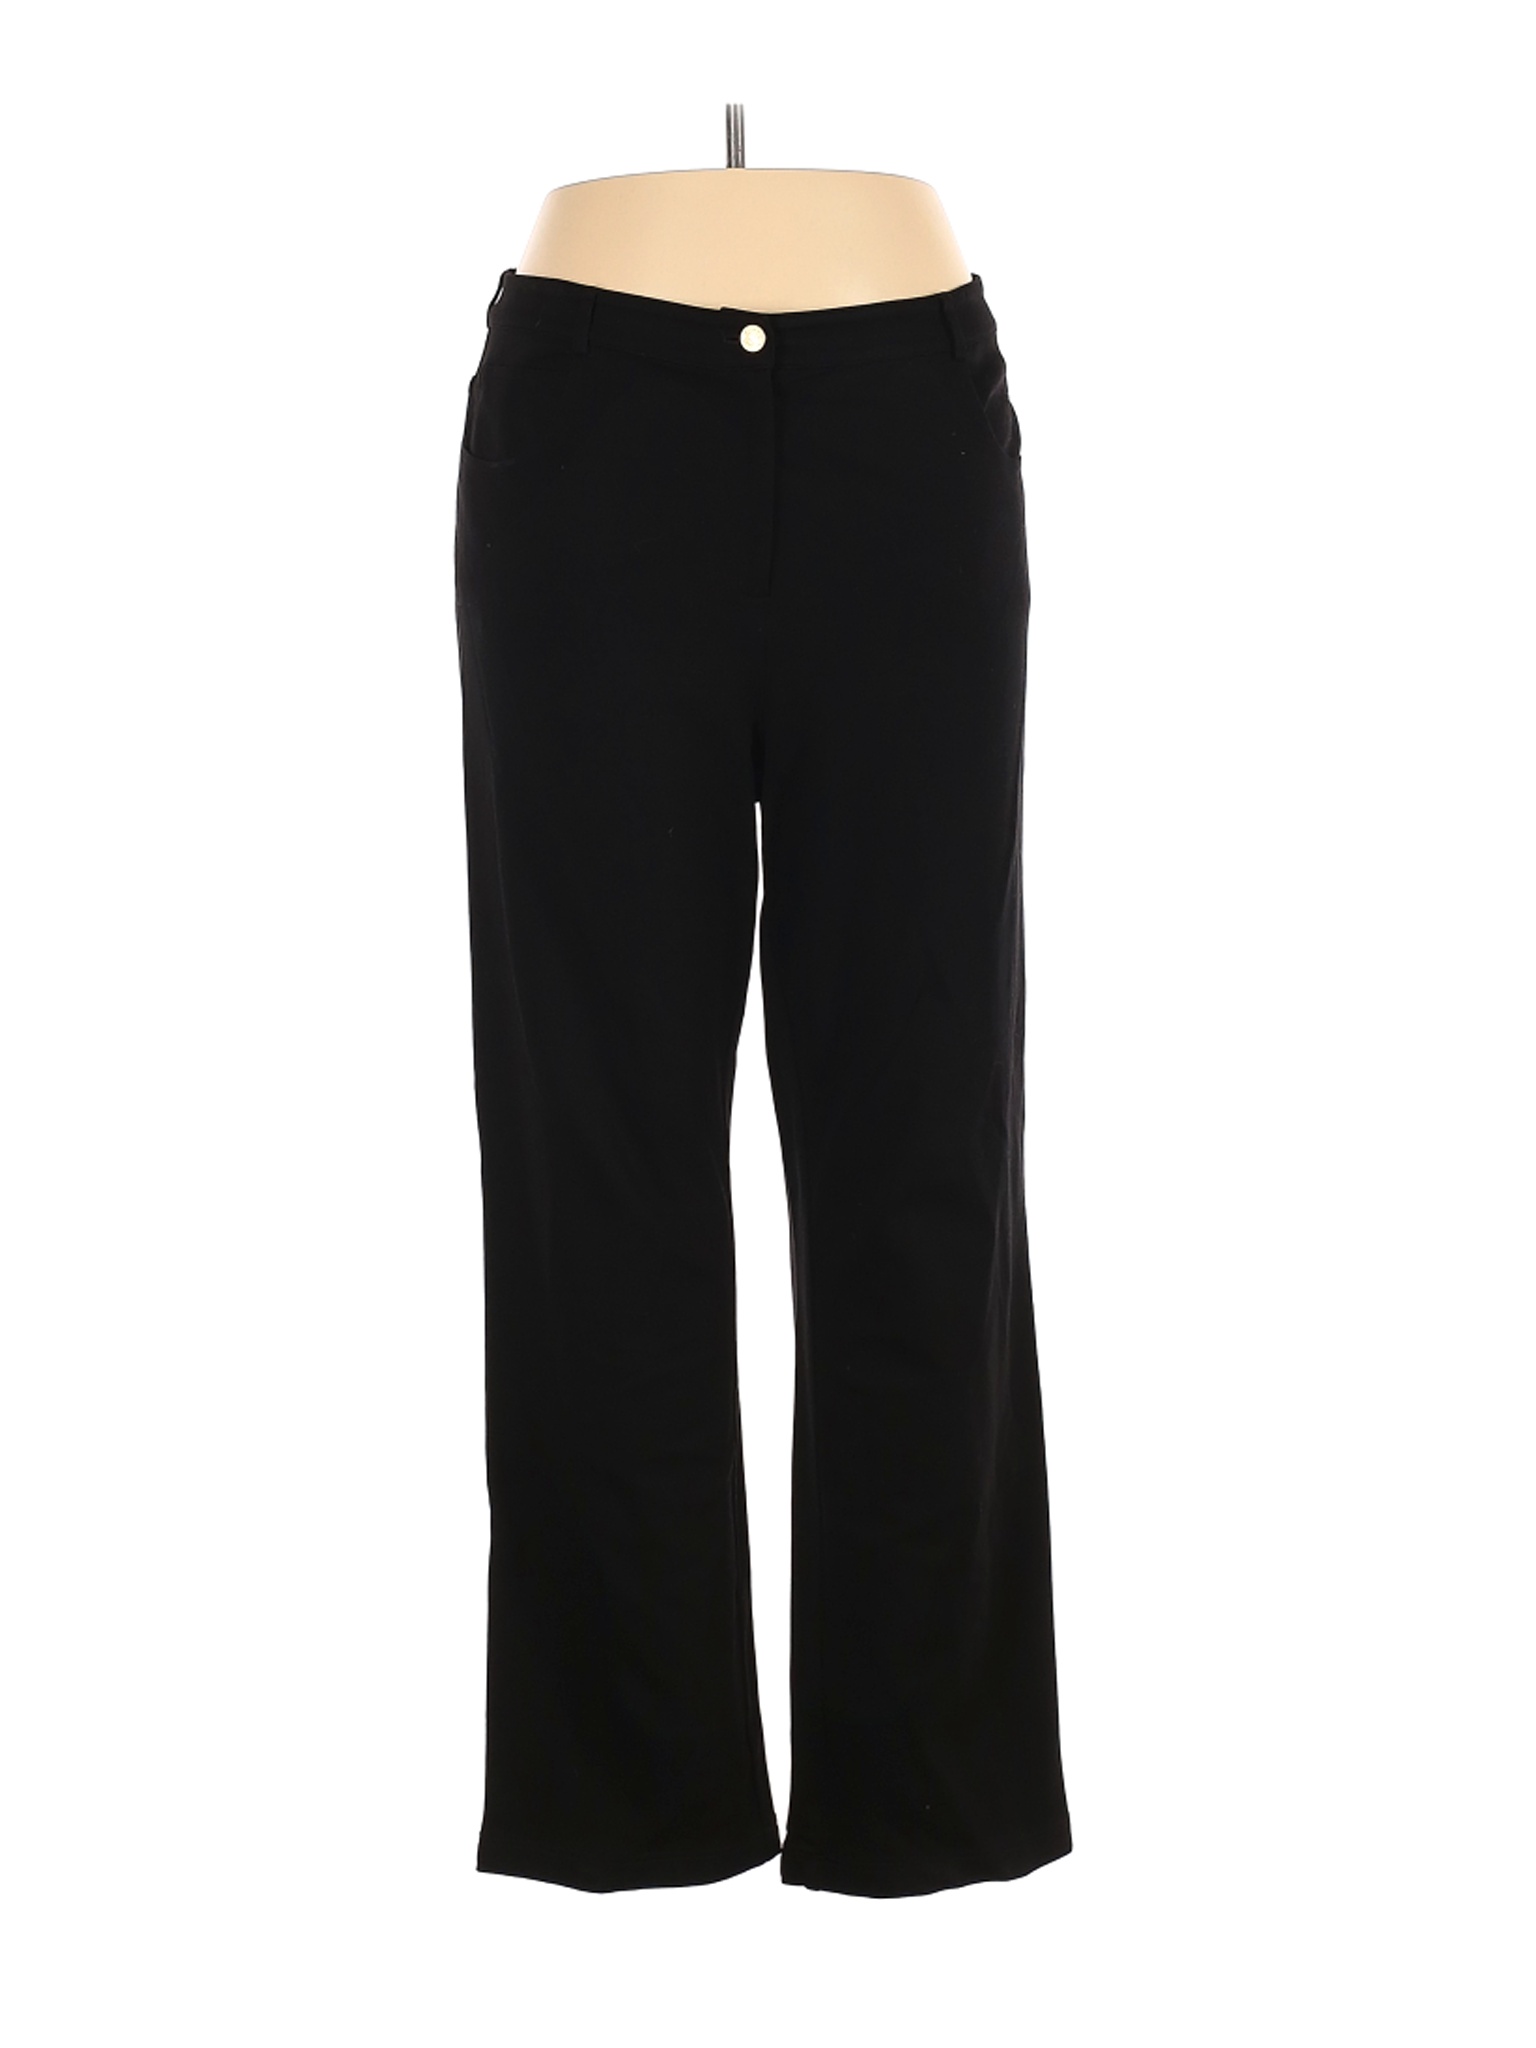 St. John Women Black Casual Pants 14 | eBay